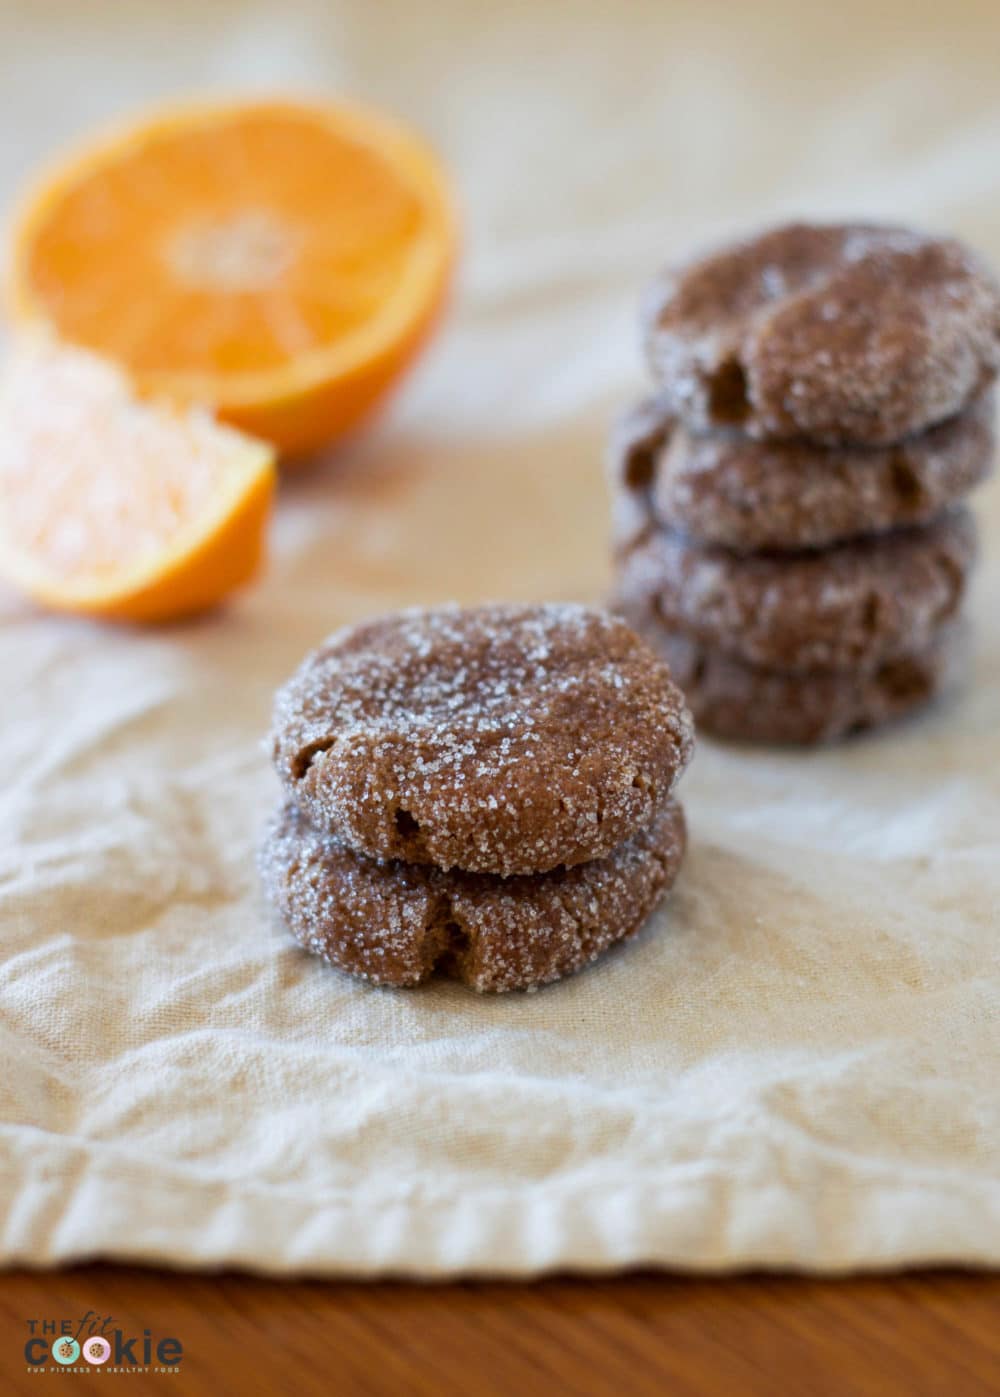 Grain-Free Chocolate Orange Cookies (#GrainFree & #Vegan) - @TheFitCookie #thereciperedux 